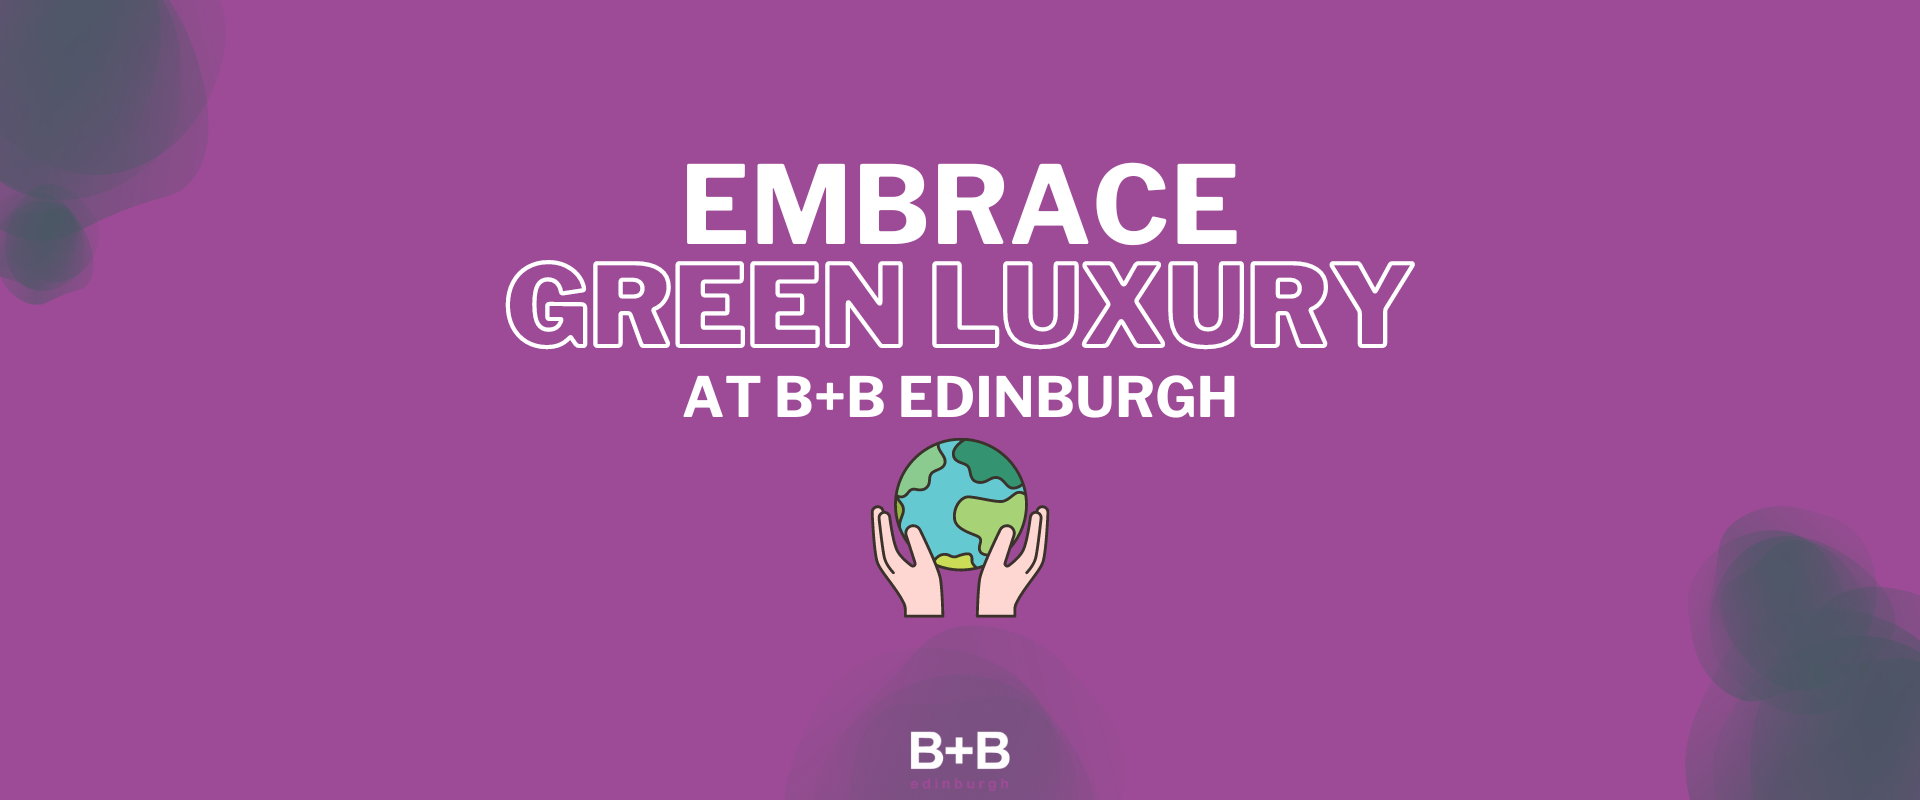 Embrace Green Luxury at B+B Edinburgh